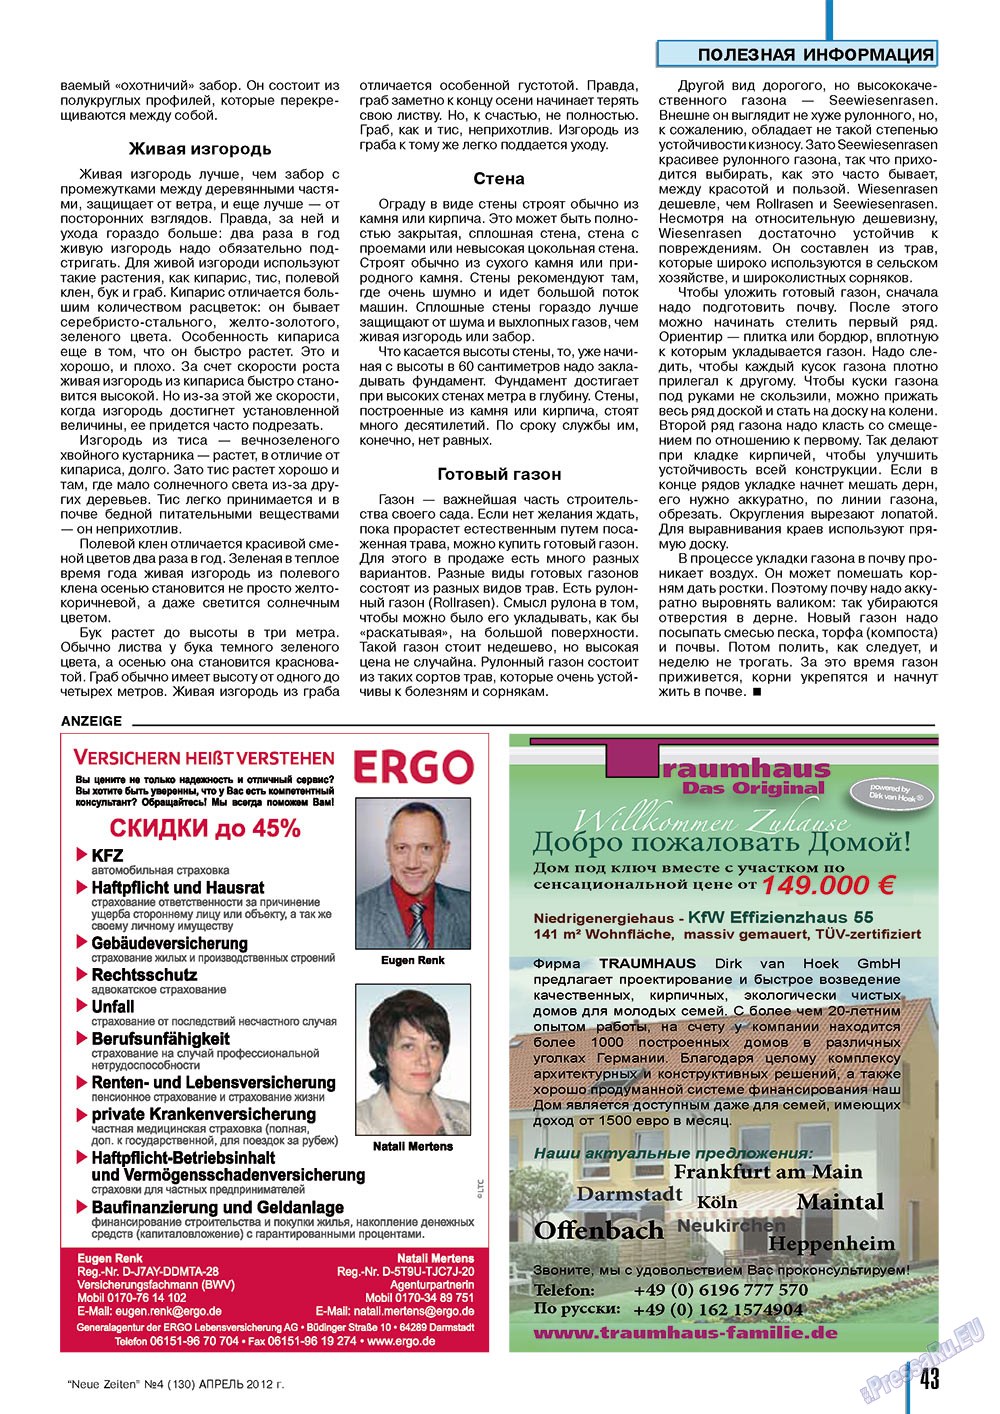 Neue Zeiten (журнал). 2012 год, номер 4, стр. 43